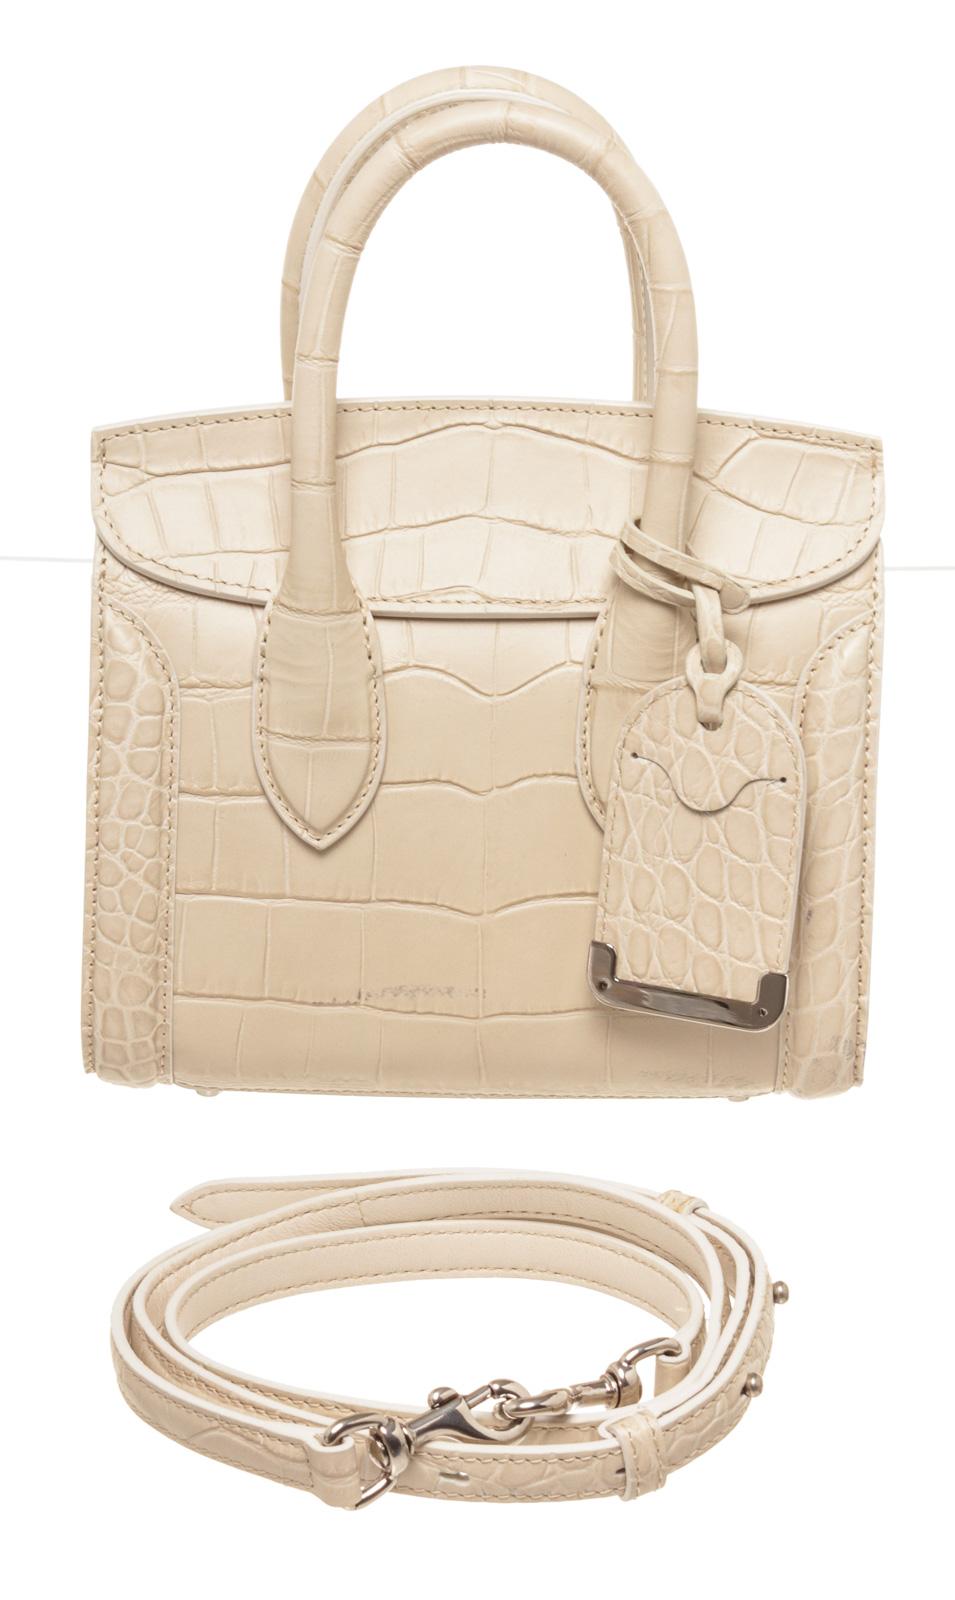 Alexander McQueen White Leather Mc Queen Her Handbag with material leather, gold-tone, interior zip pocket, dual top handle andÂ flap closure.

40673MSCÂ 